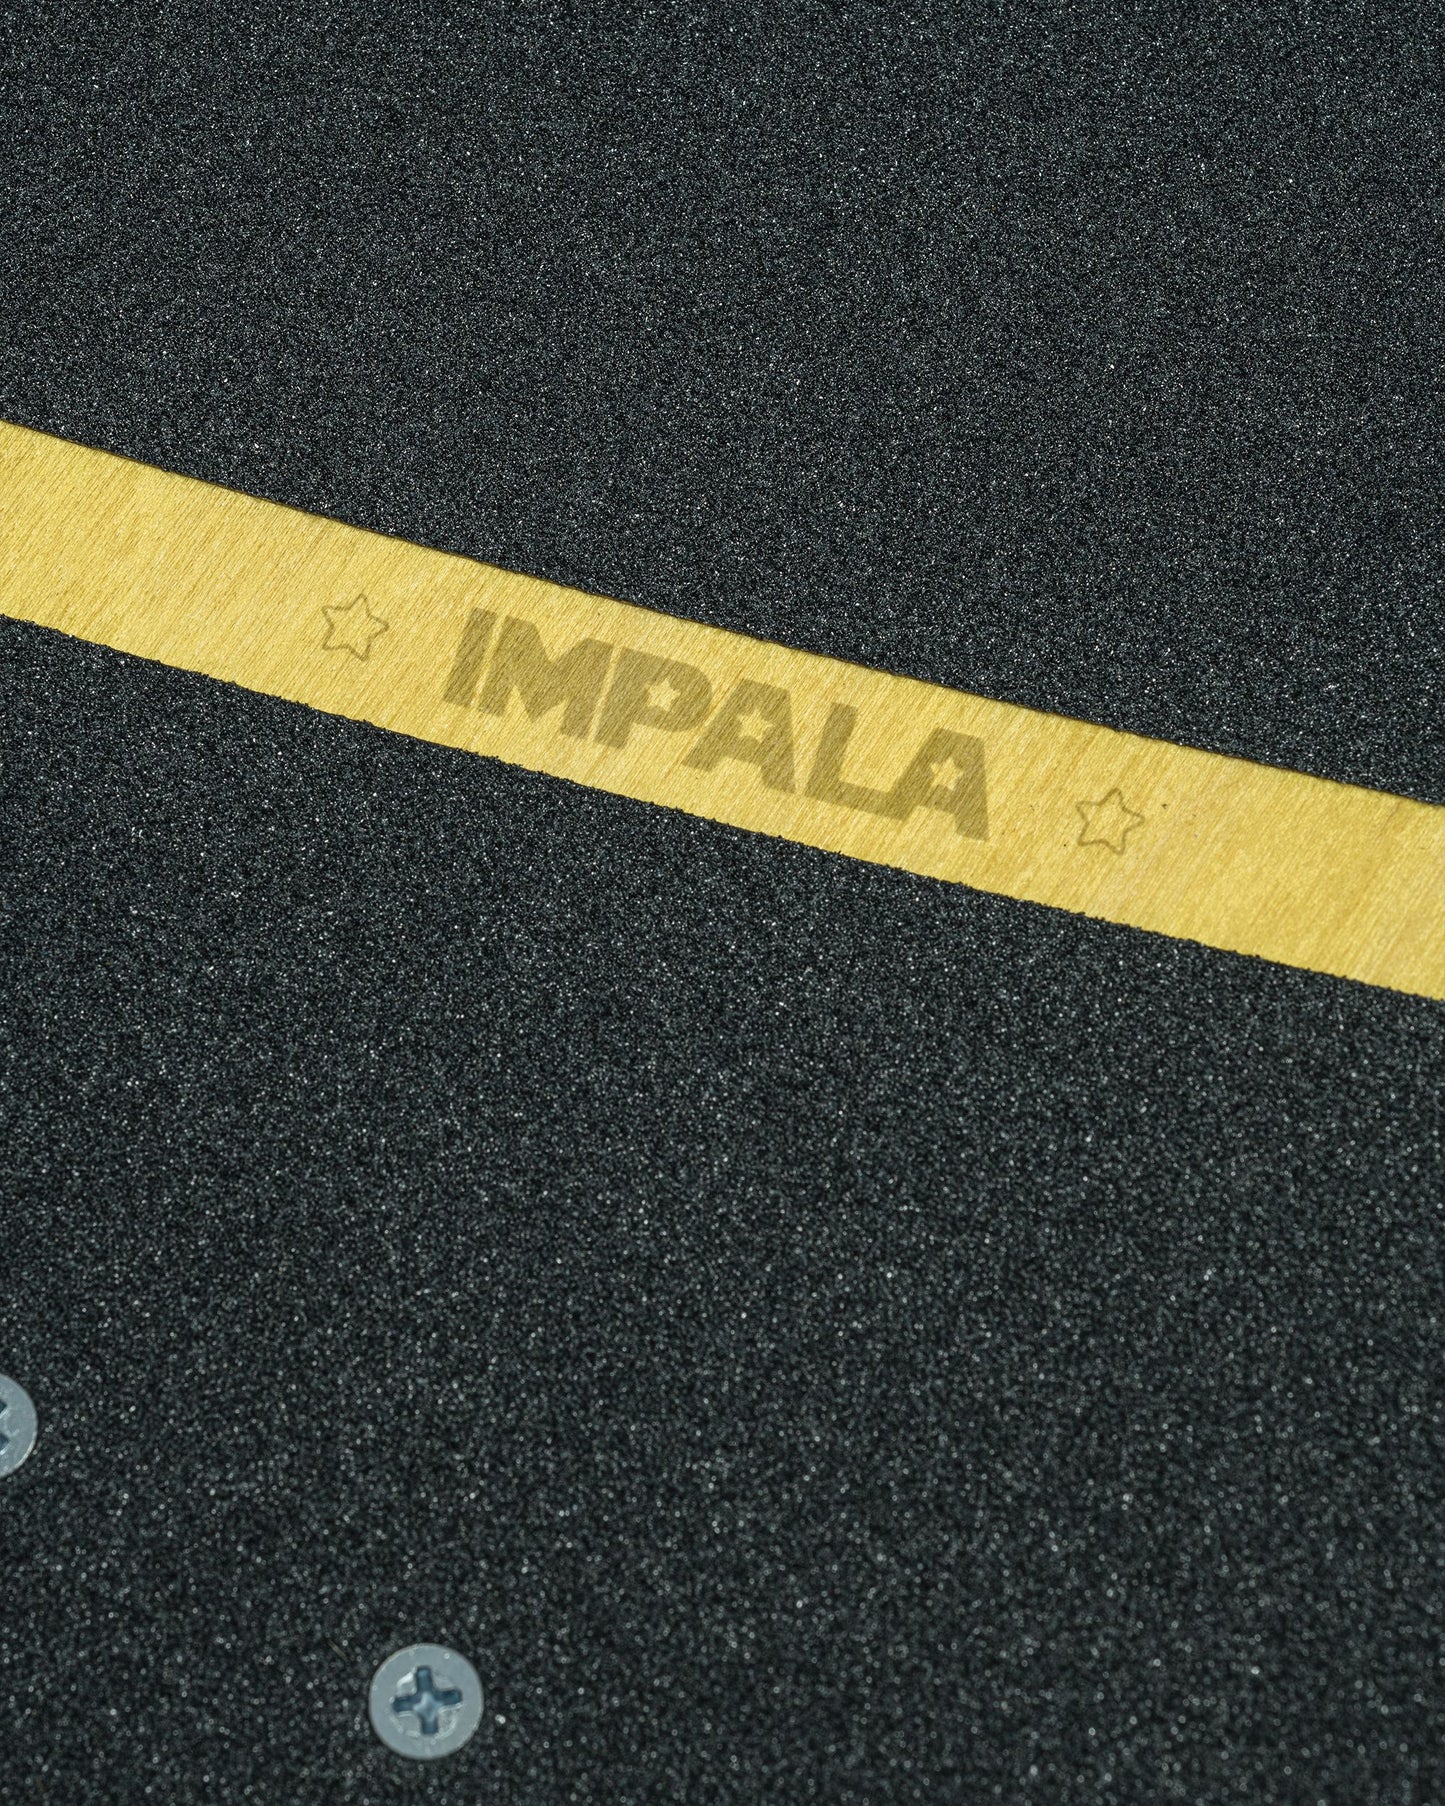 Grip tape detailing of Impala Blossom Skateboard - Wattle